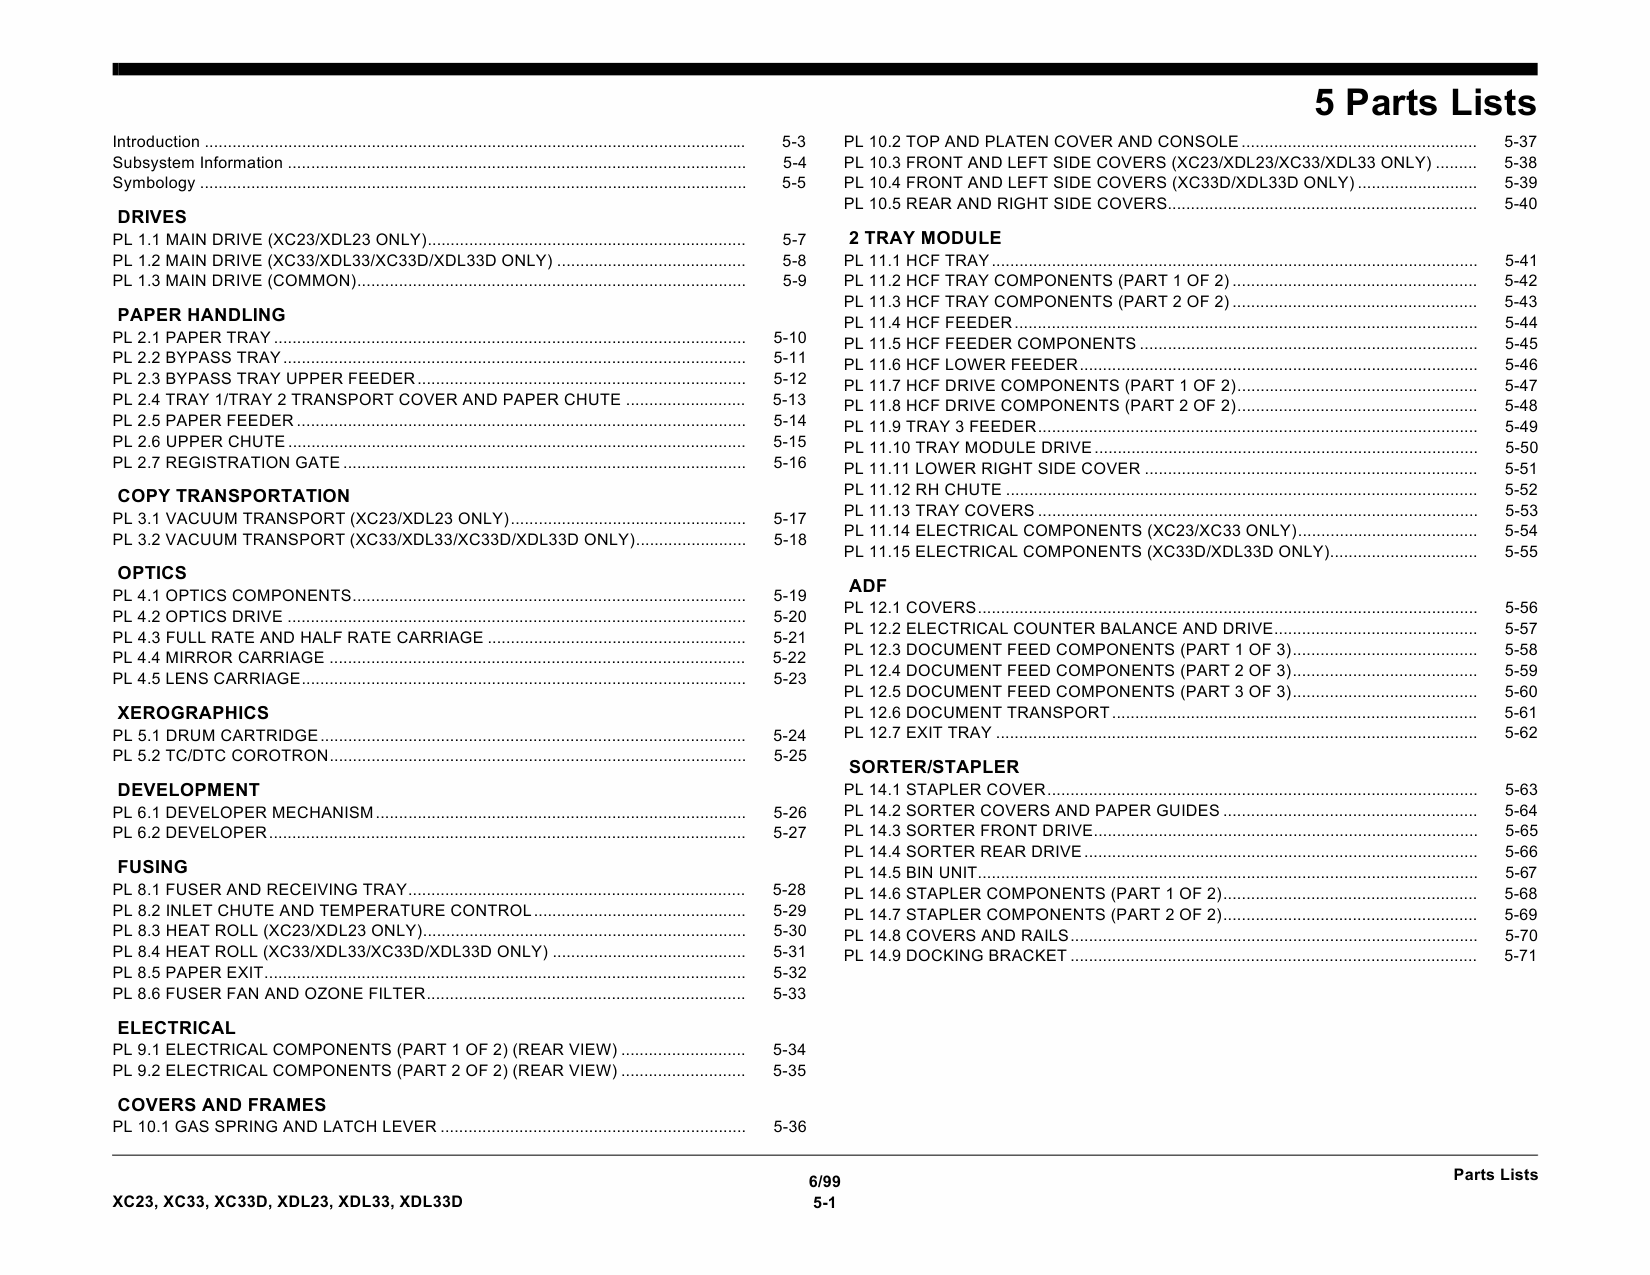 Xerox WorkCentre XC23 XC33 XC33D XDL23 XDL33 XDL33D Parts List Manual-1